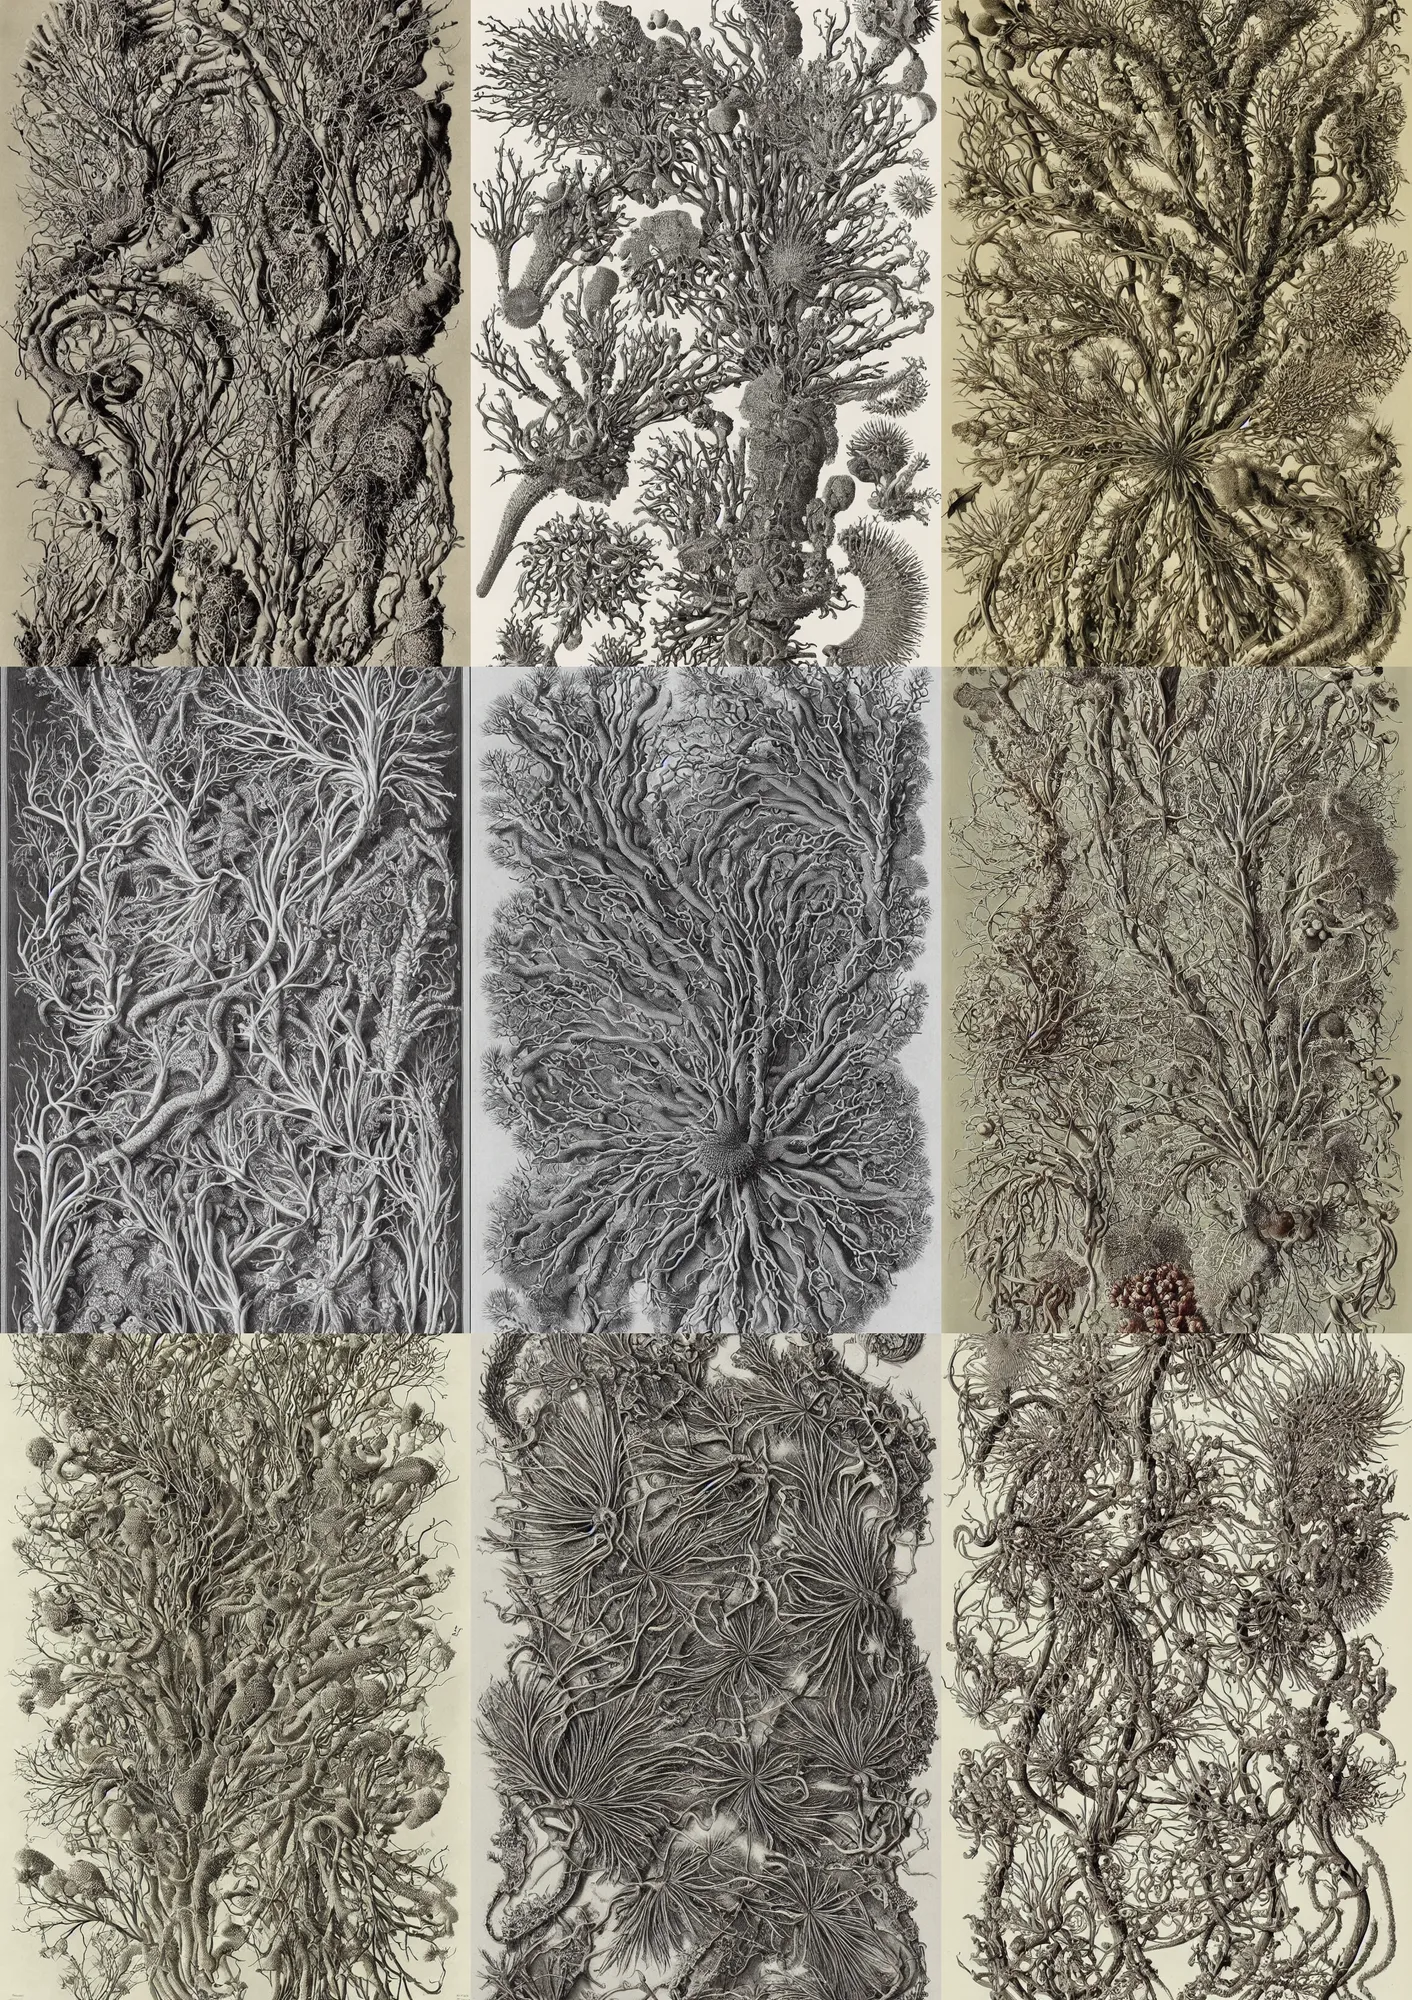 Prompt: elaborate natural illustrations by ernst haeckel of the biological world, nervous systems, animal kingdom